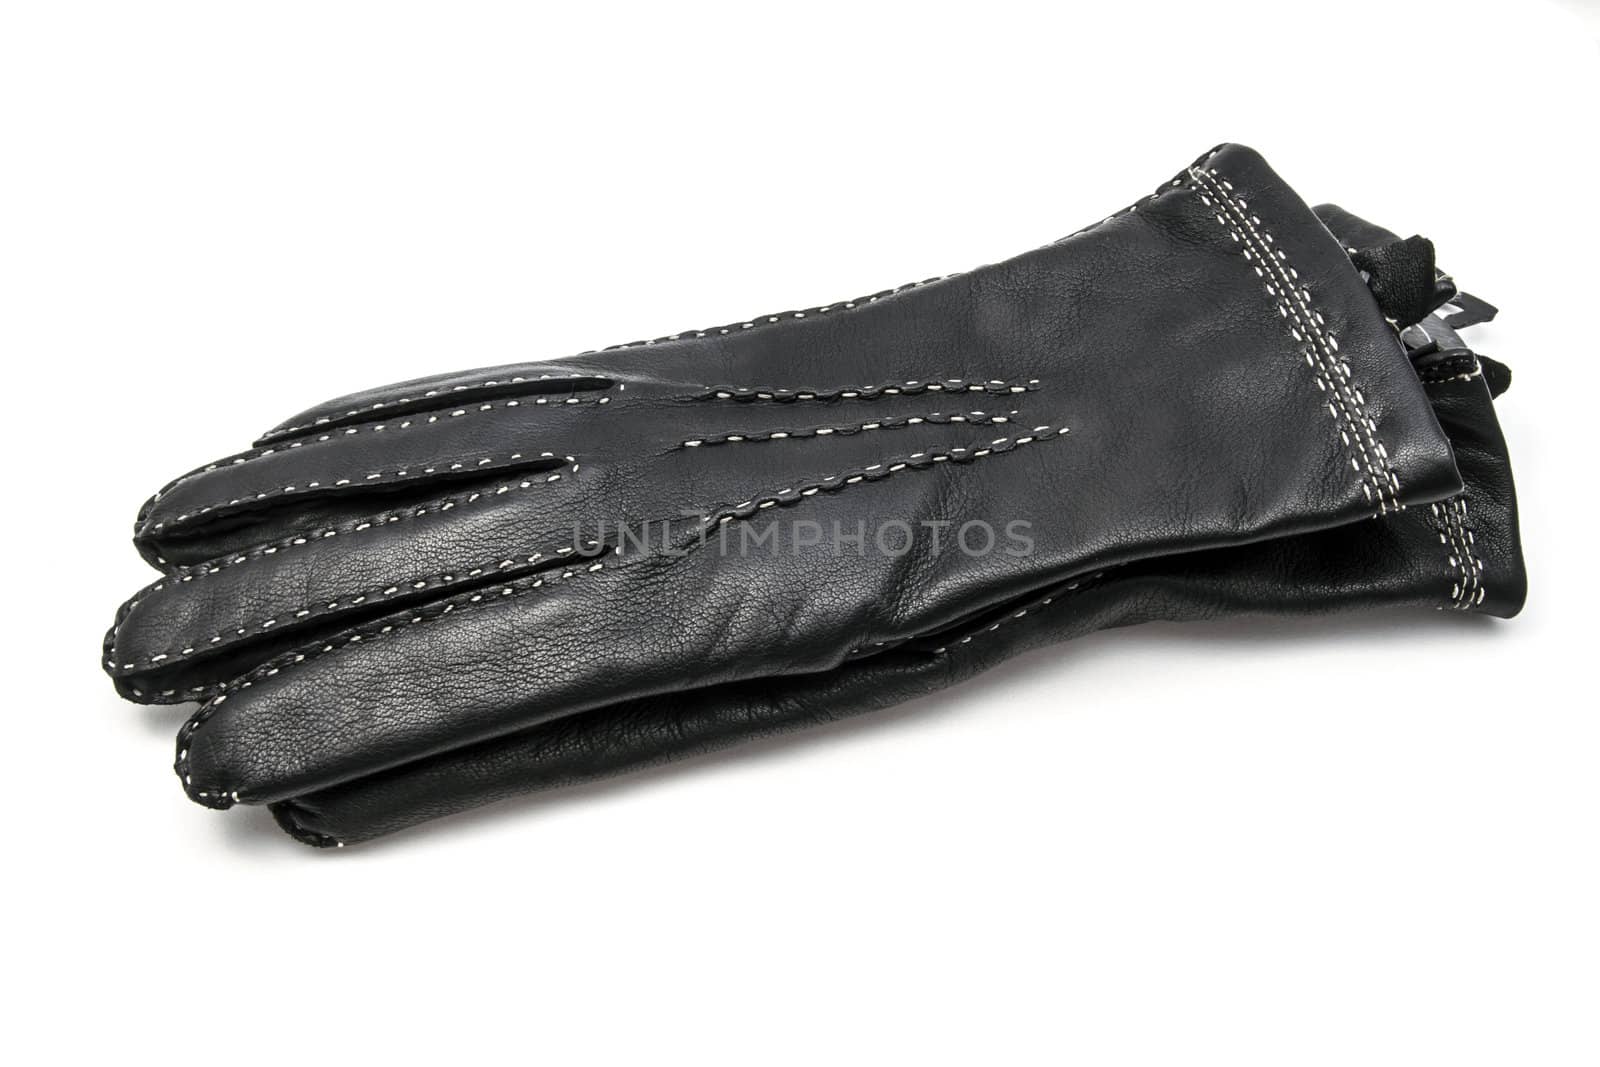 Black leather gloves isolated on white background